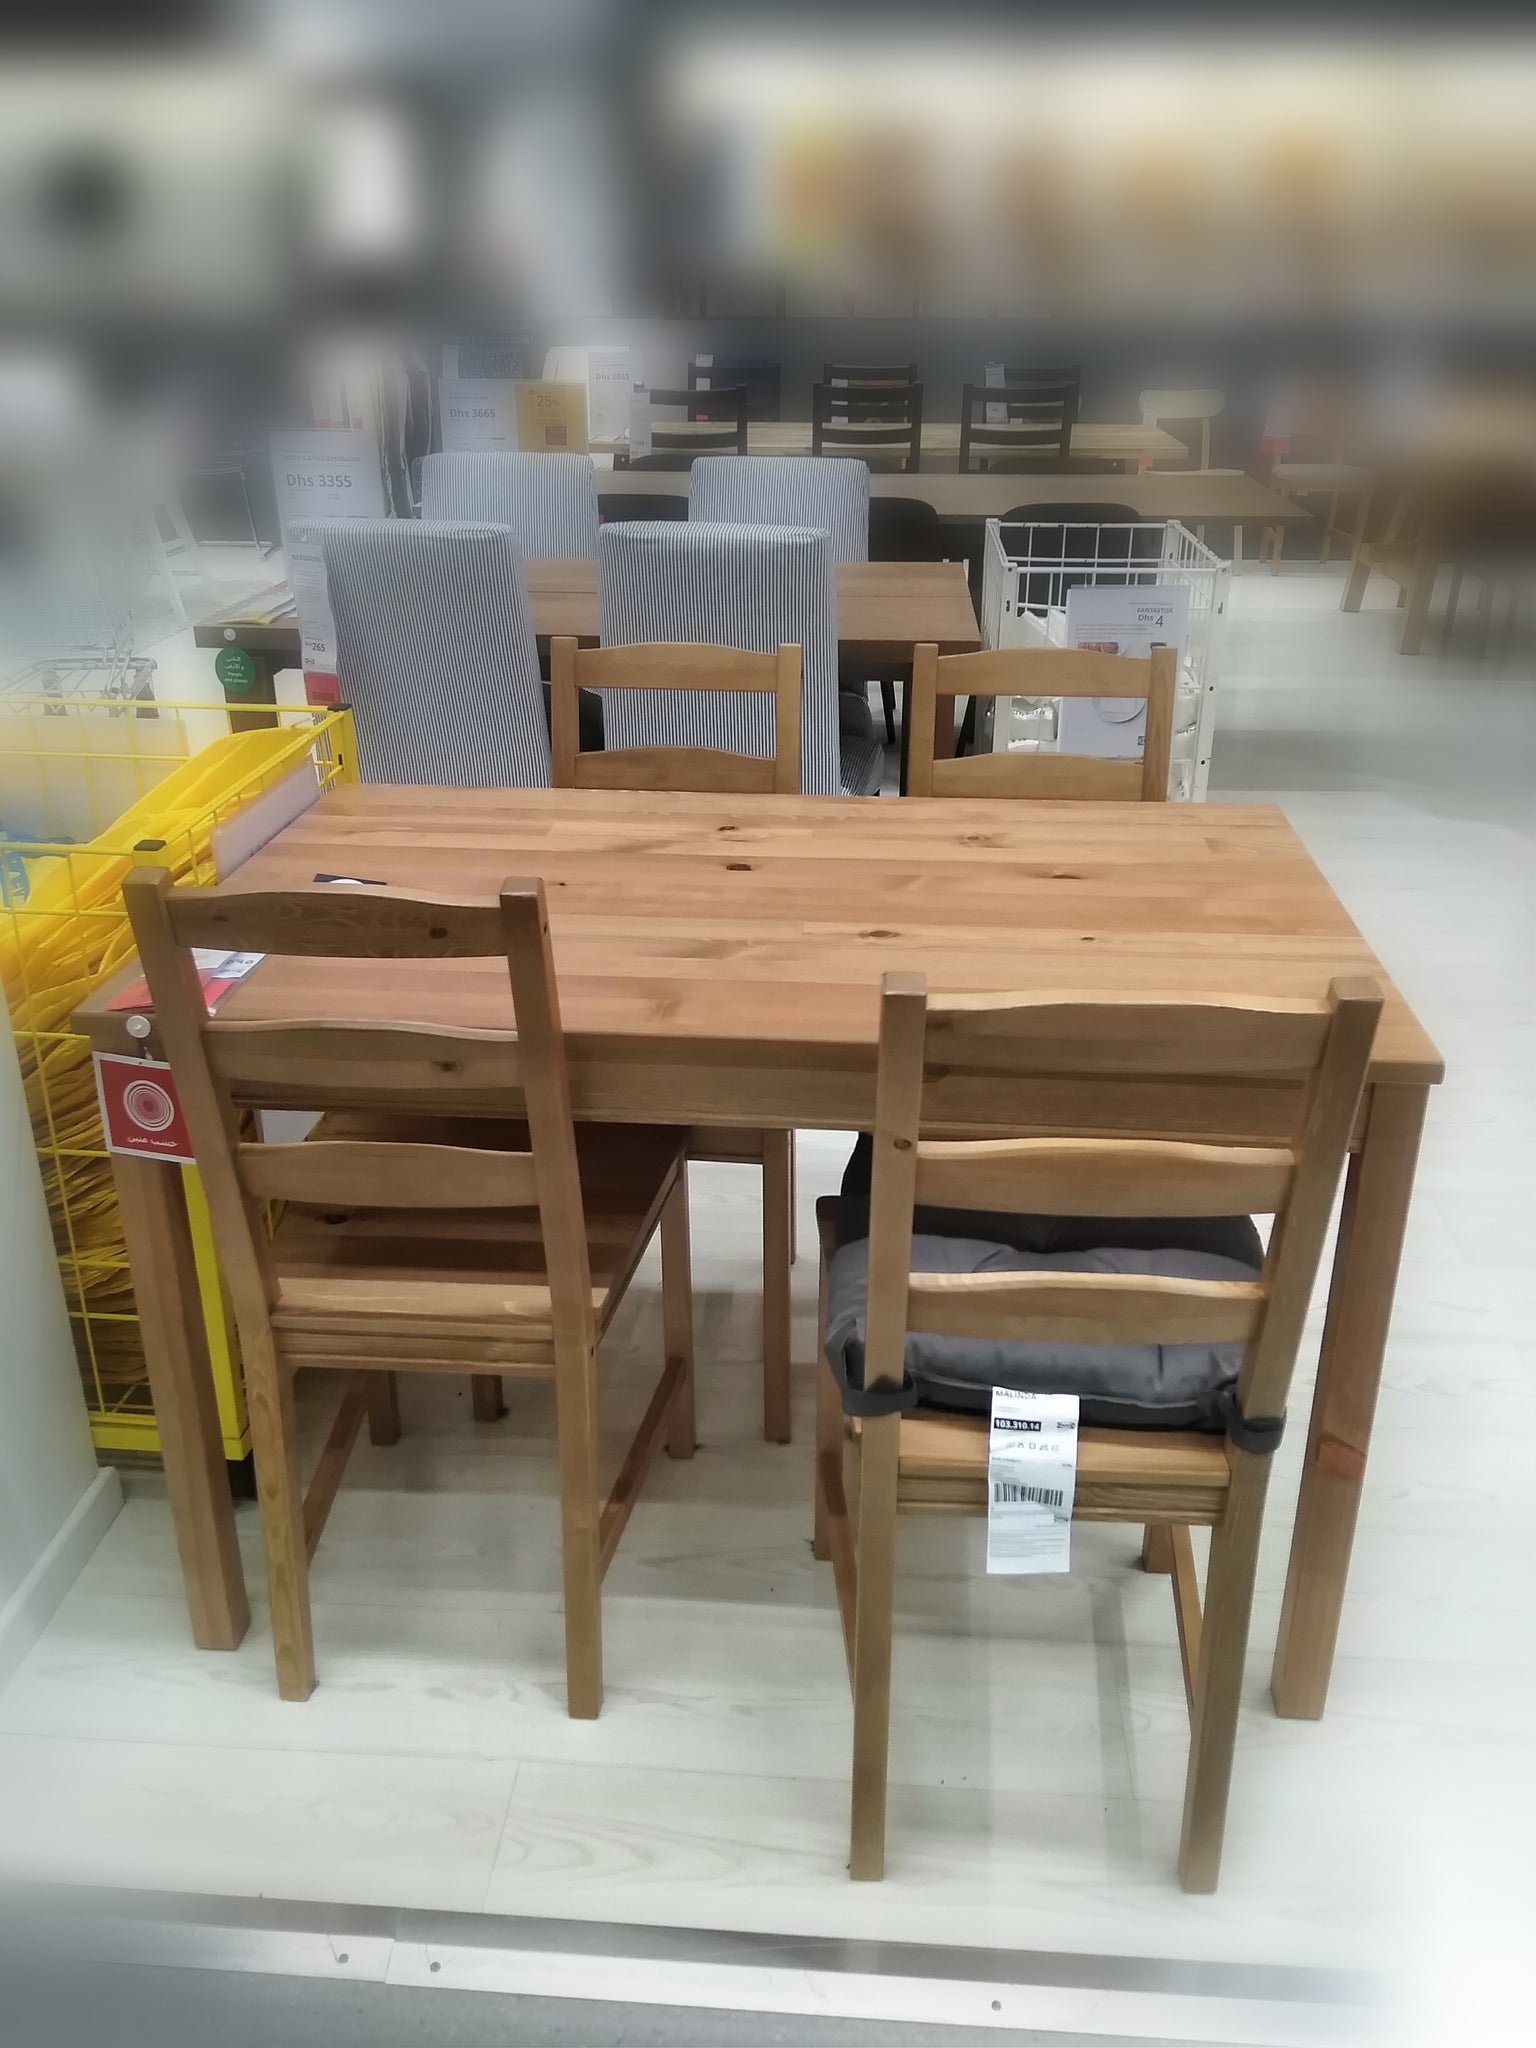 JOKKMOKK Table and 4 chairs